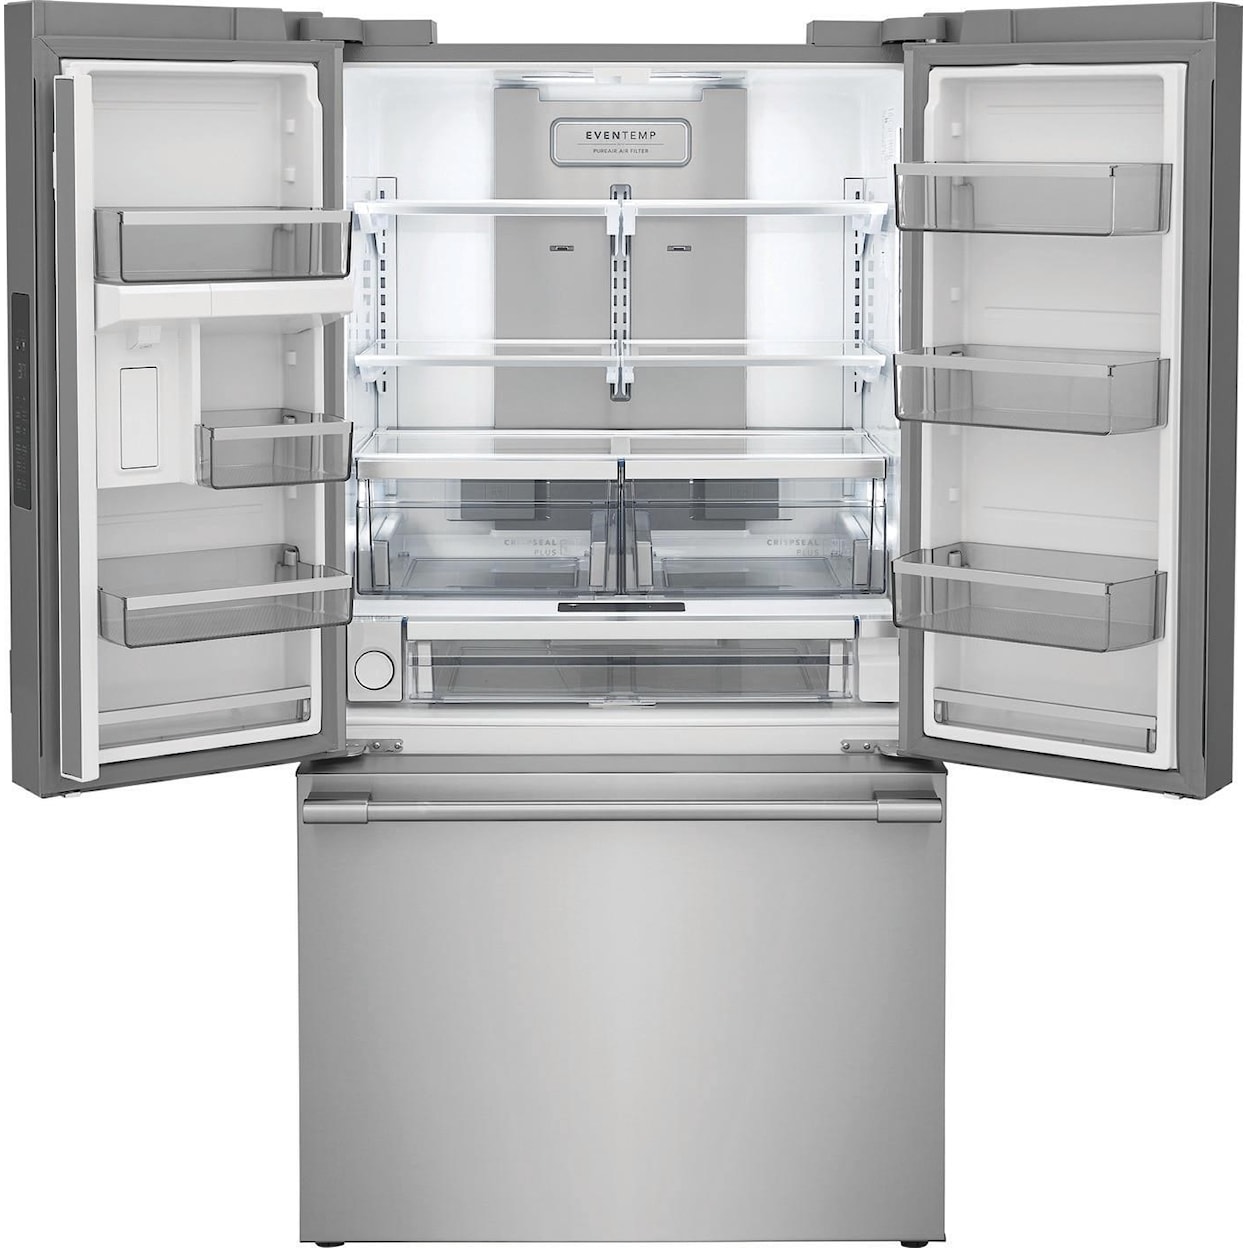 Frigidaire Professional - French Door Refrigerators 23.3 Cu. Ft. French Door Refrigerator